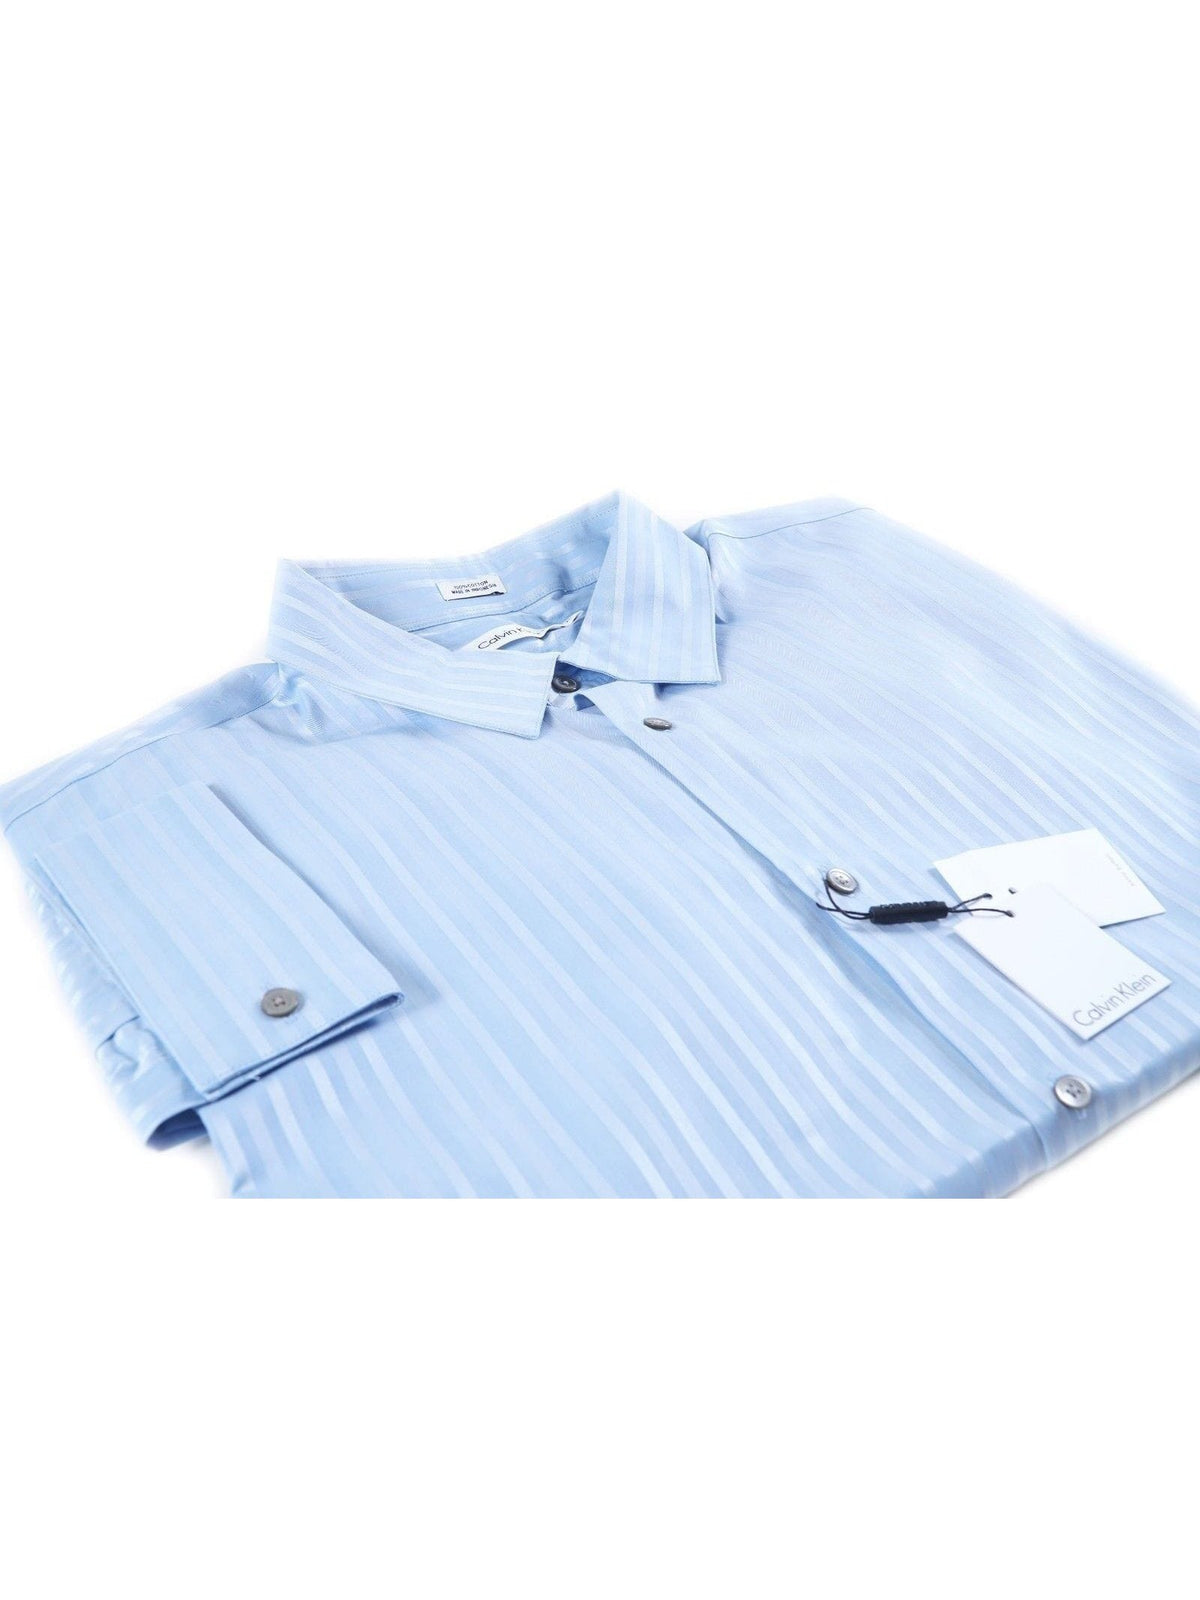 Calvin Klein SHIRTS Calvin Klein Mens Blue Striped Classic Fit 100% Cotton Dress Shirt